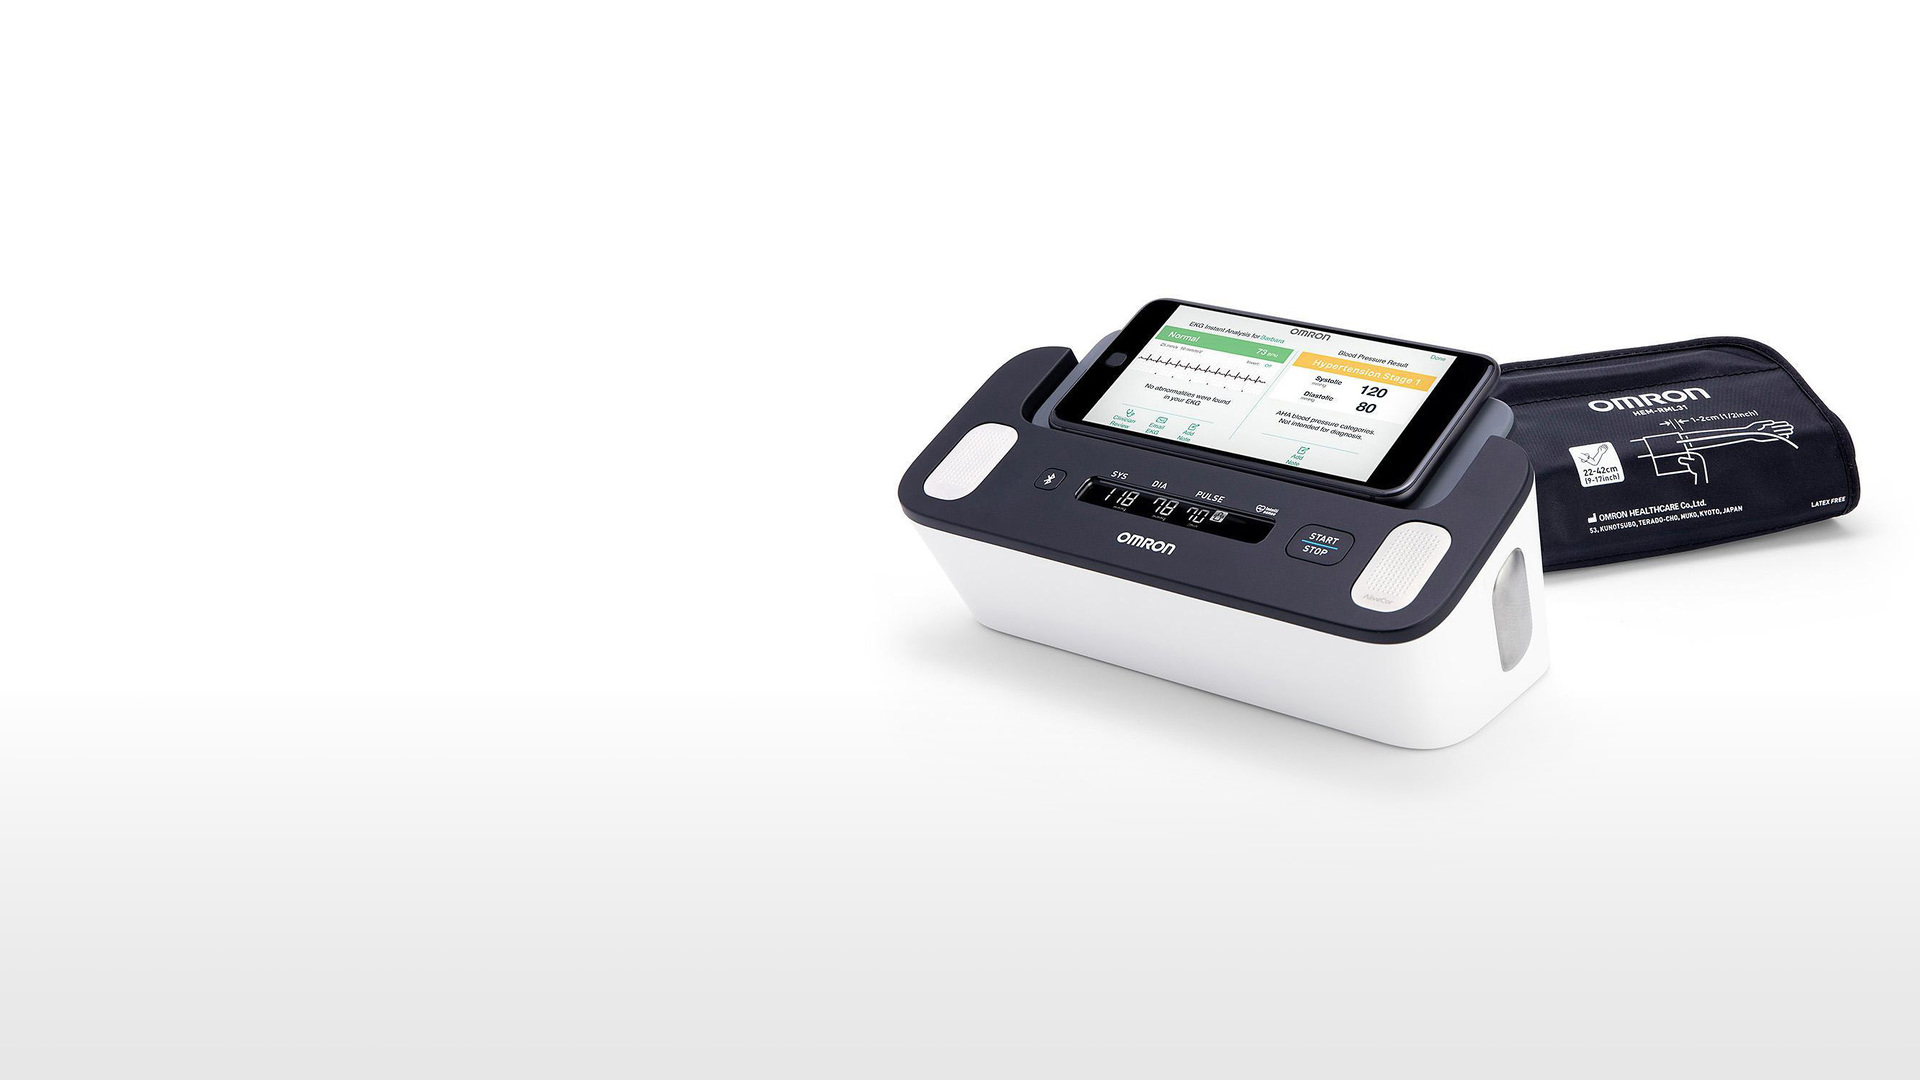 AliveCor to integrate blood pressure data into mobile ECG app